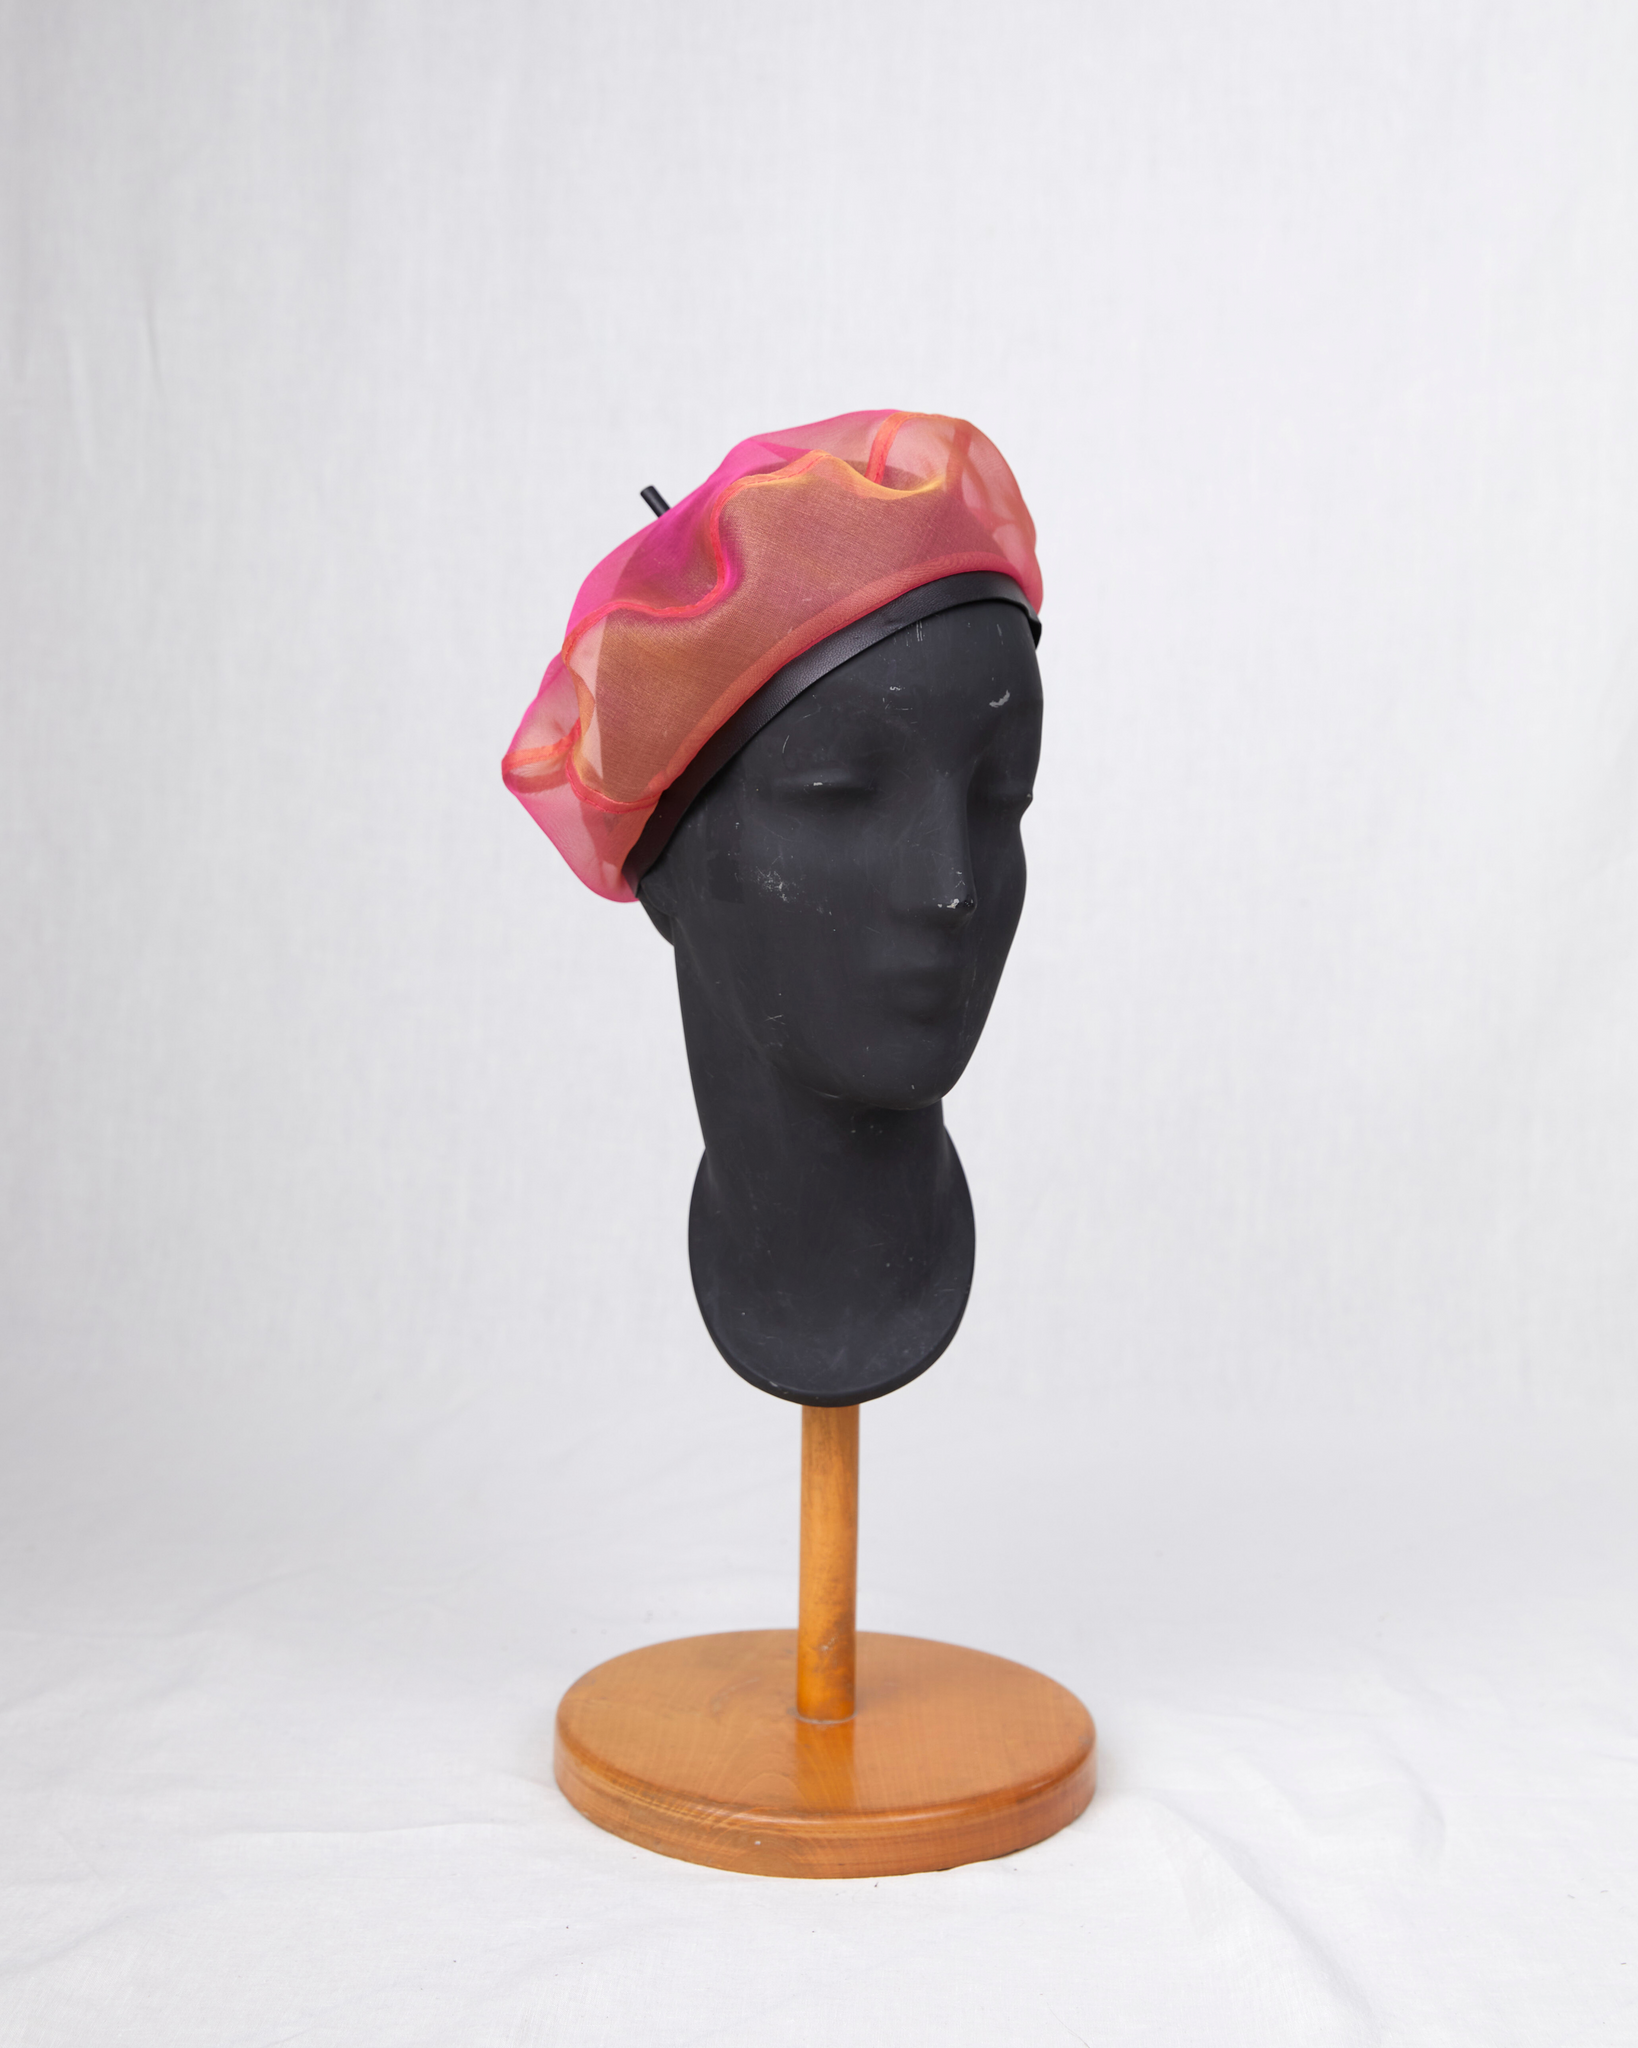 HEADQUARTER | couture headwear Silk organza beret. Designed and handcrafted in Switzerland.